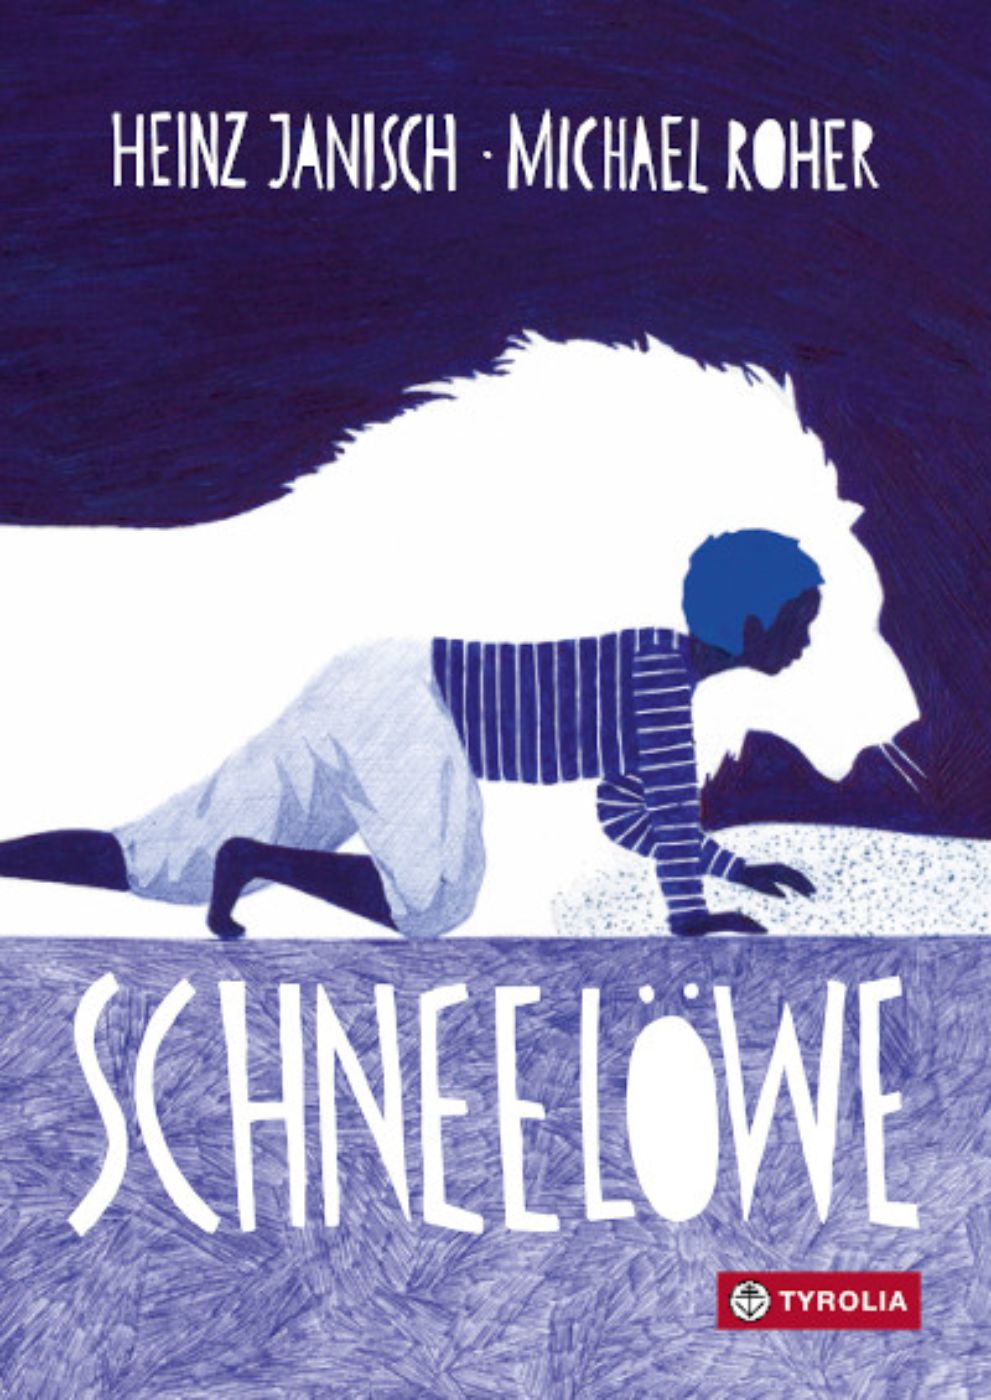 Cover Schneelöwe (c) Tyrolia Verlag